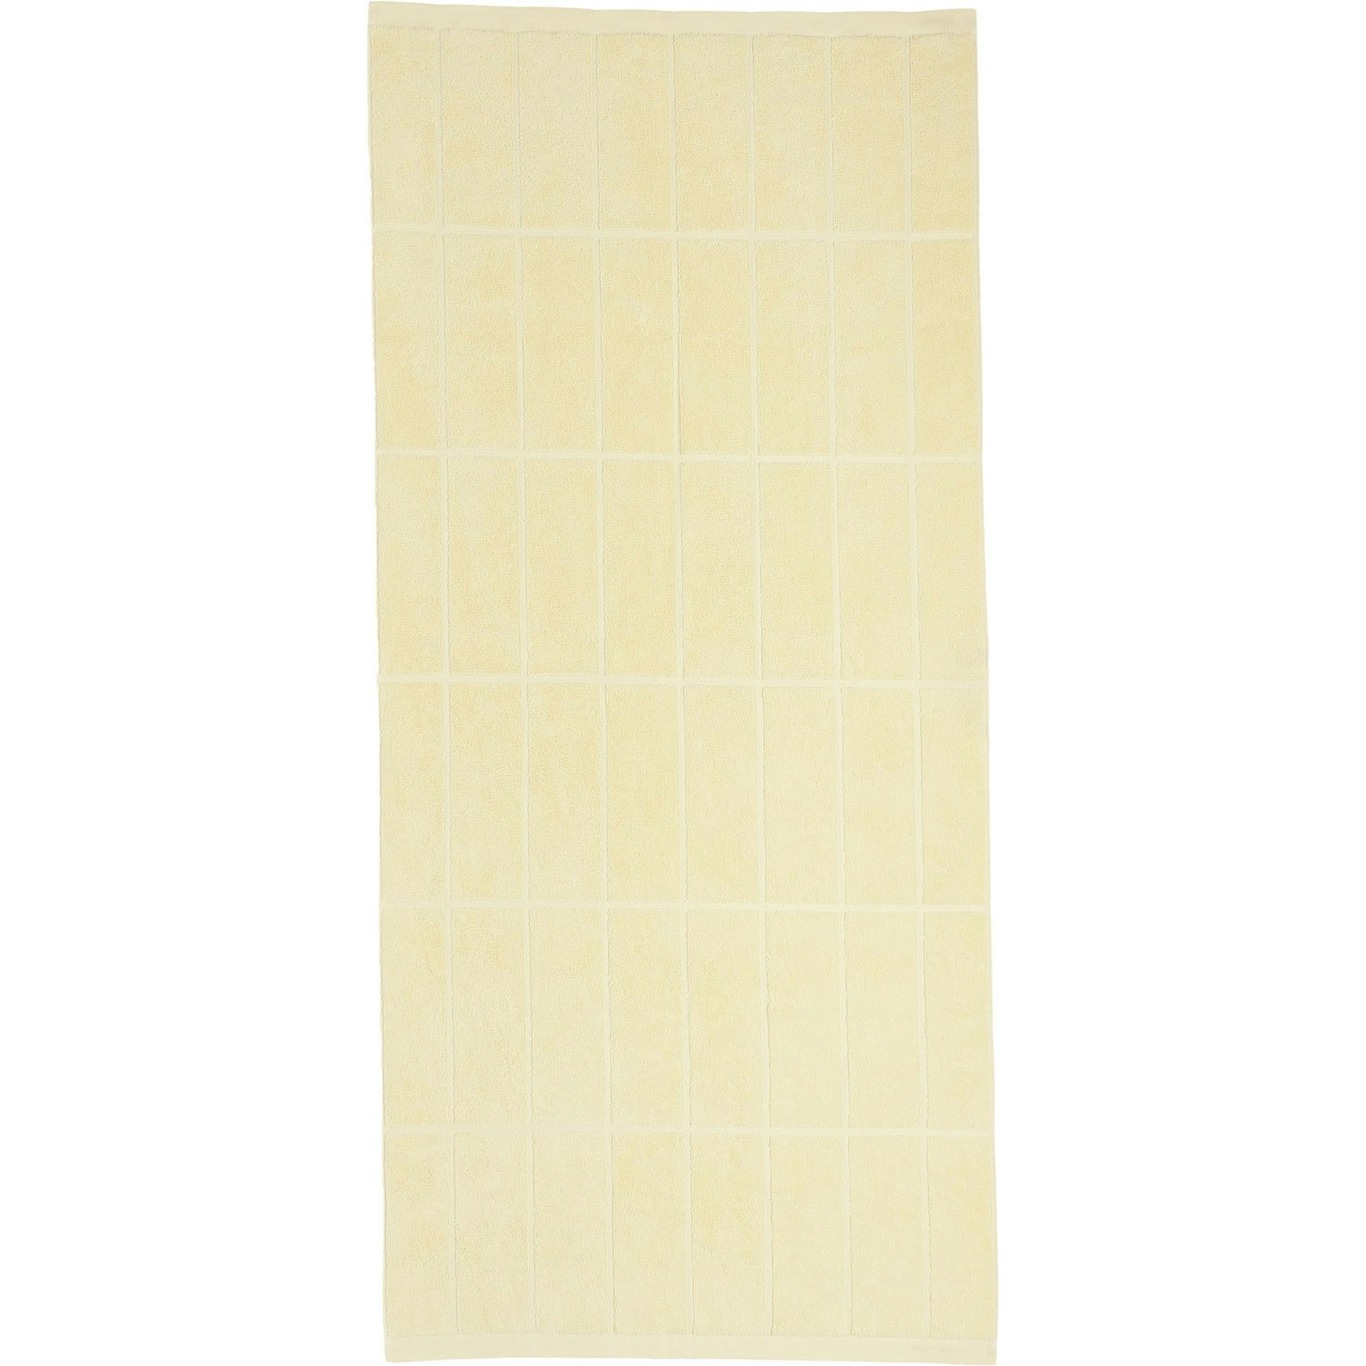 Tiiliskivi Håndkle 70x150 cm, Butter Yellow